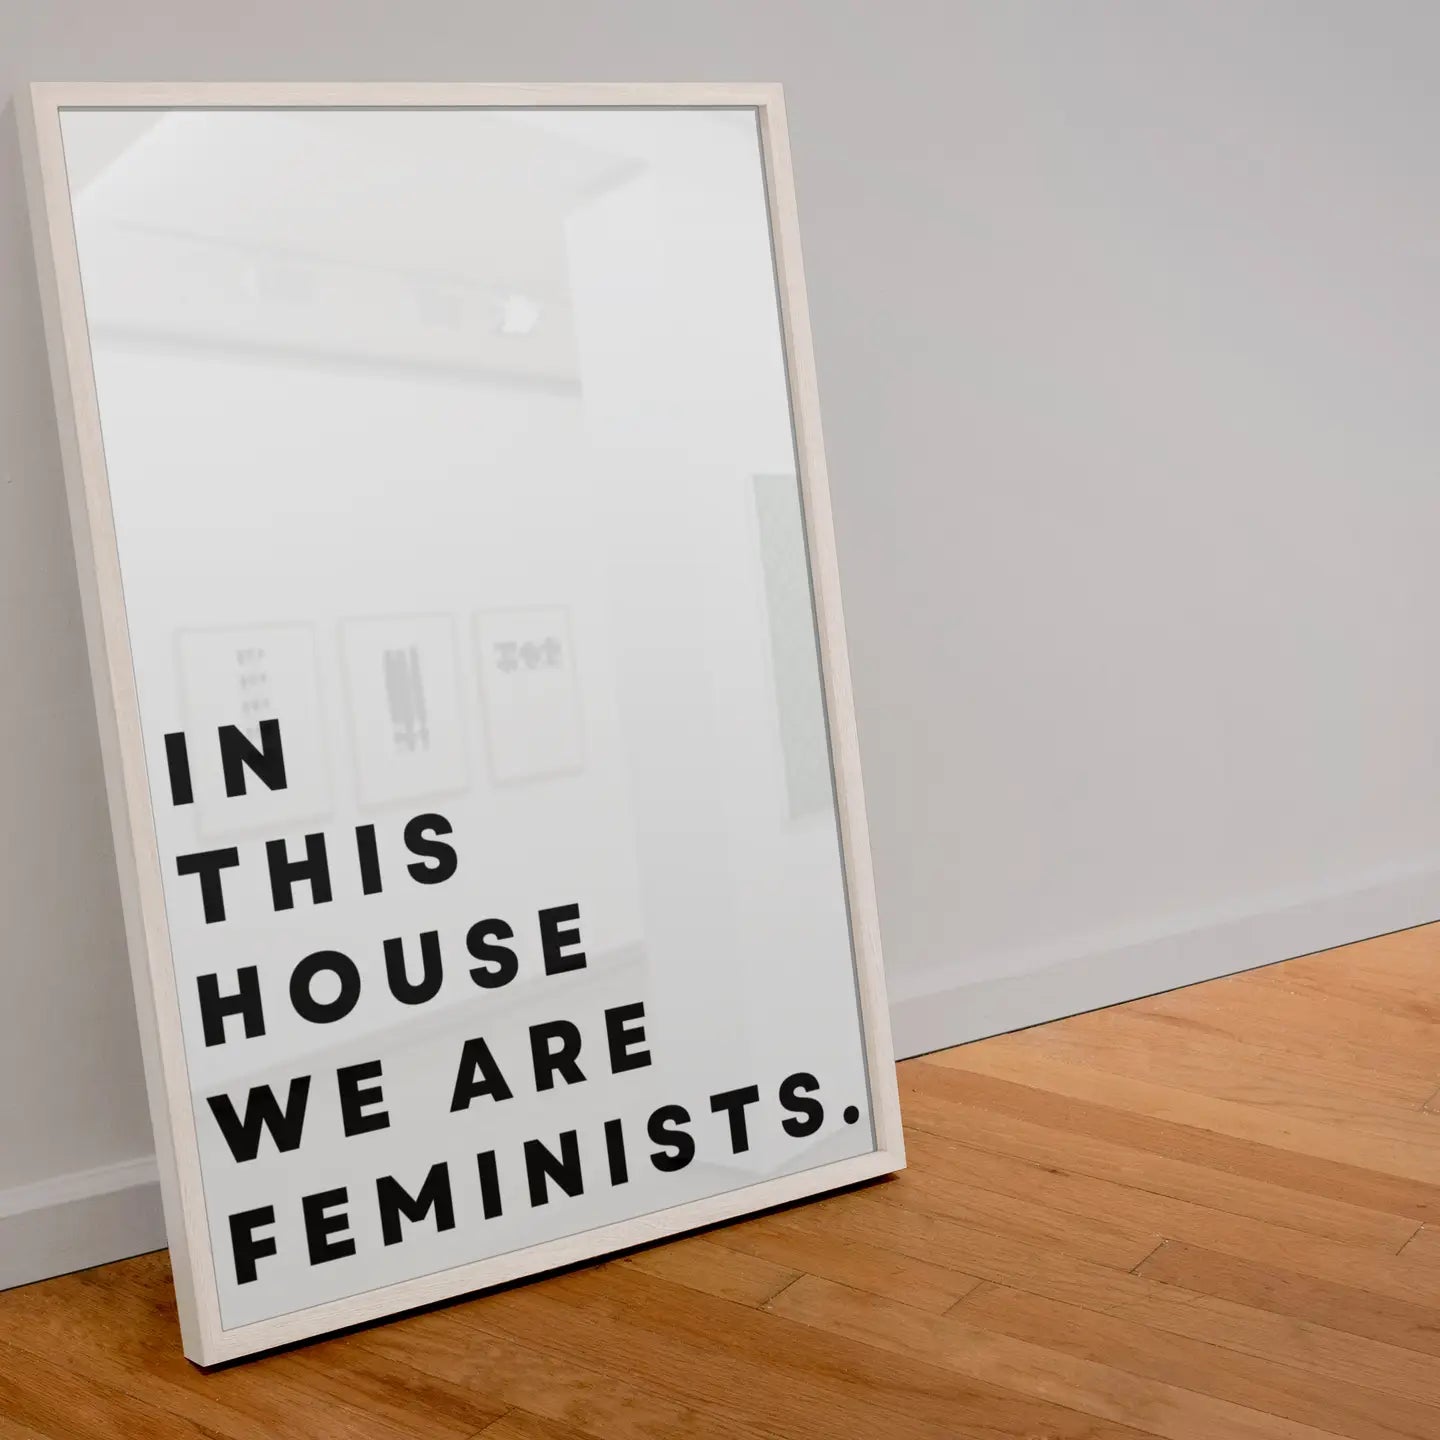 Feminists print